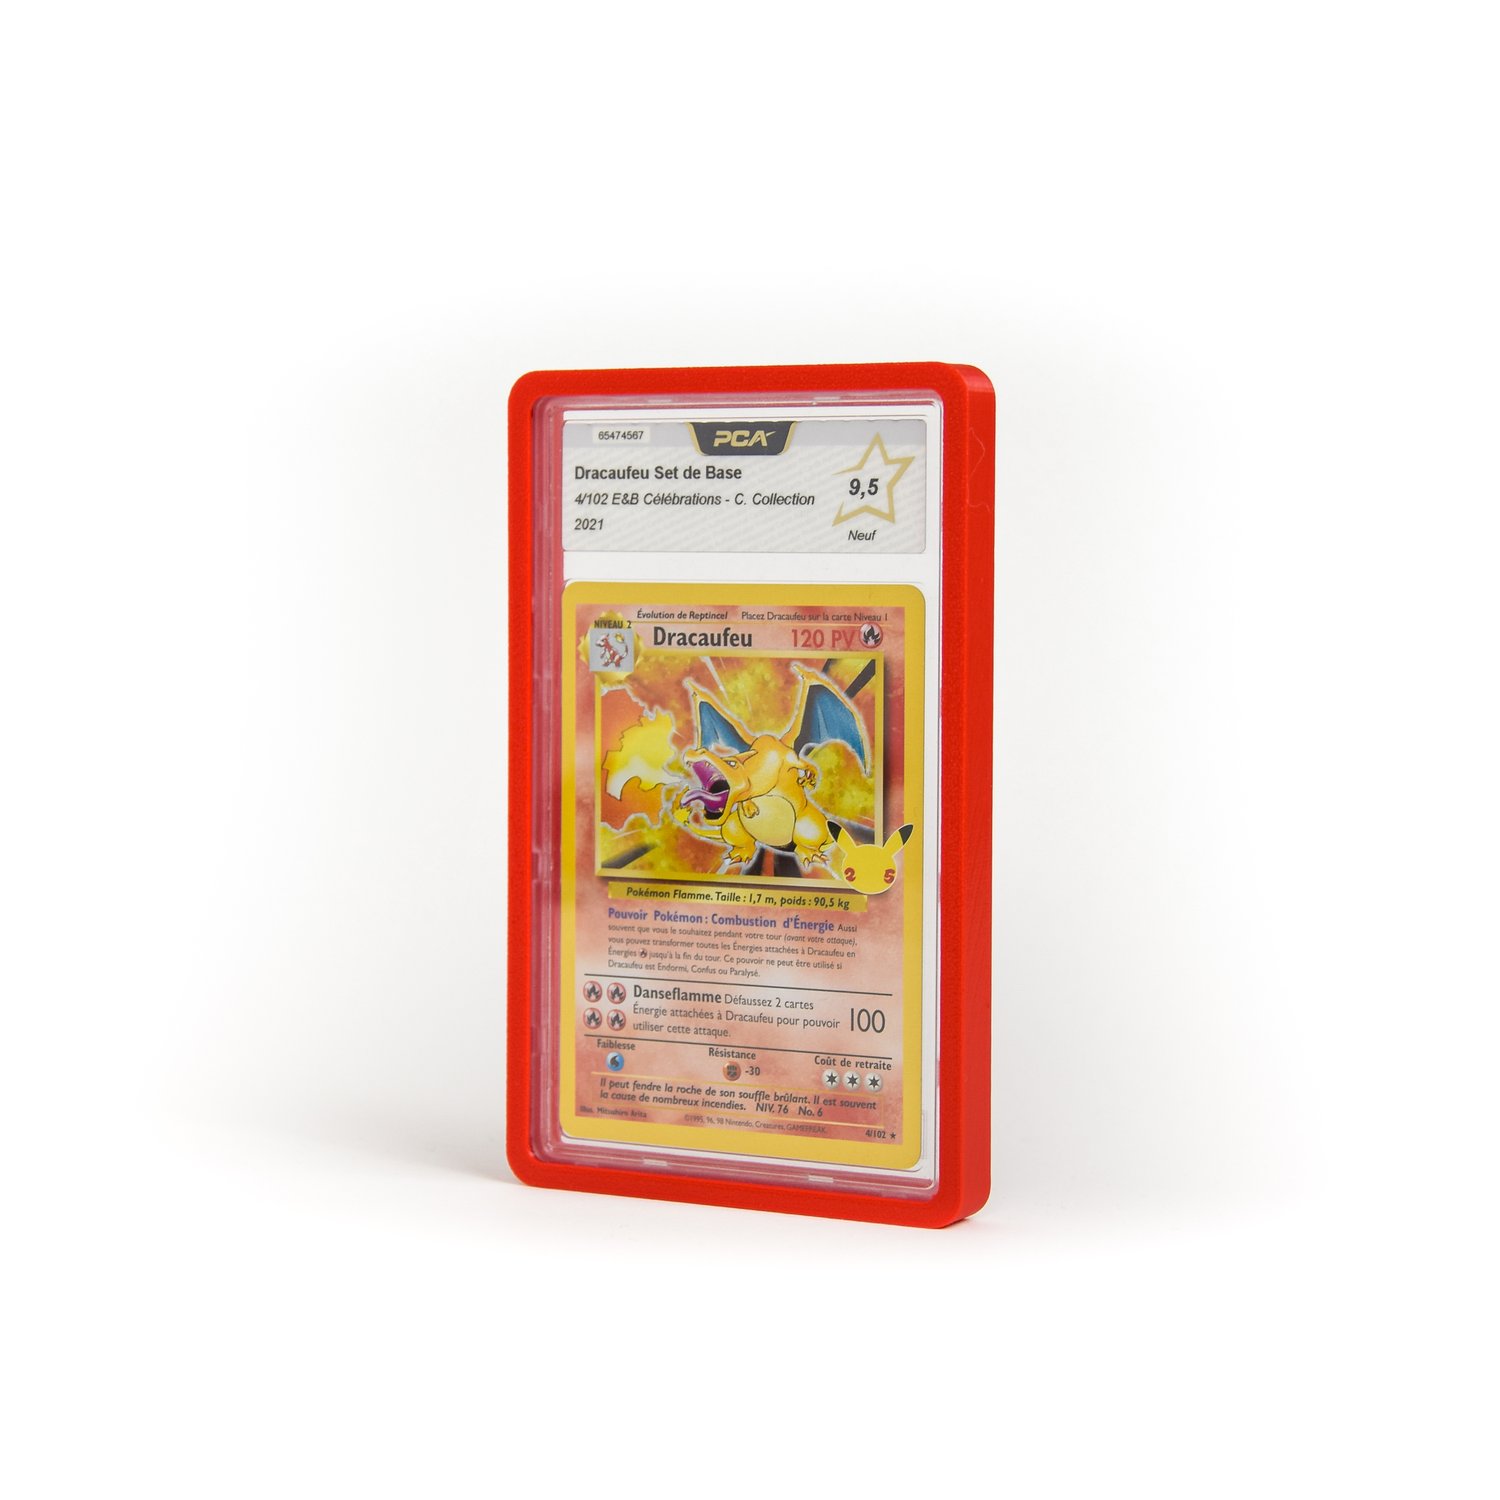 Protection 3 cartes Pokémon gradée PCA